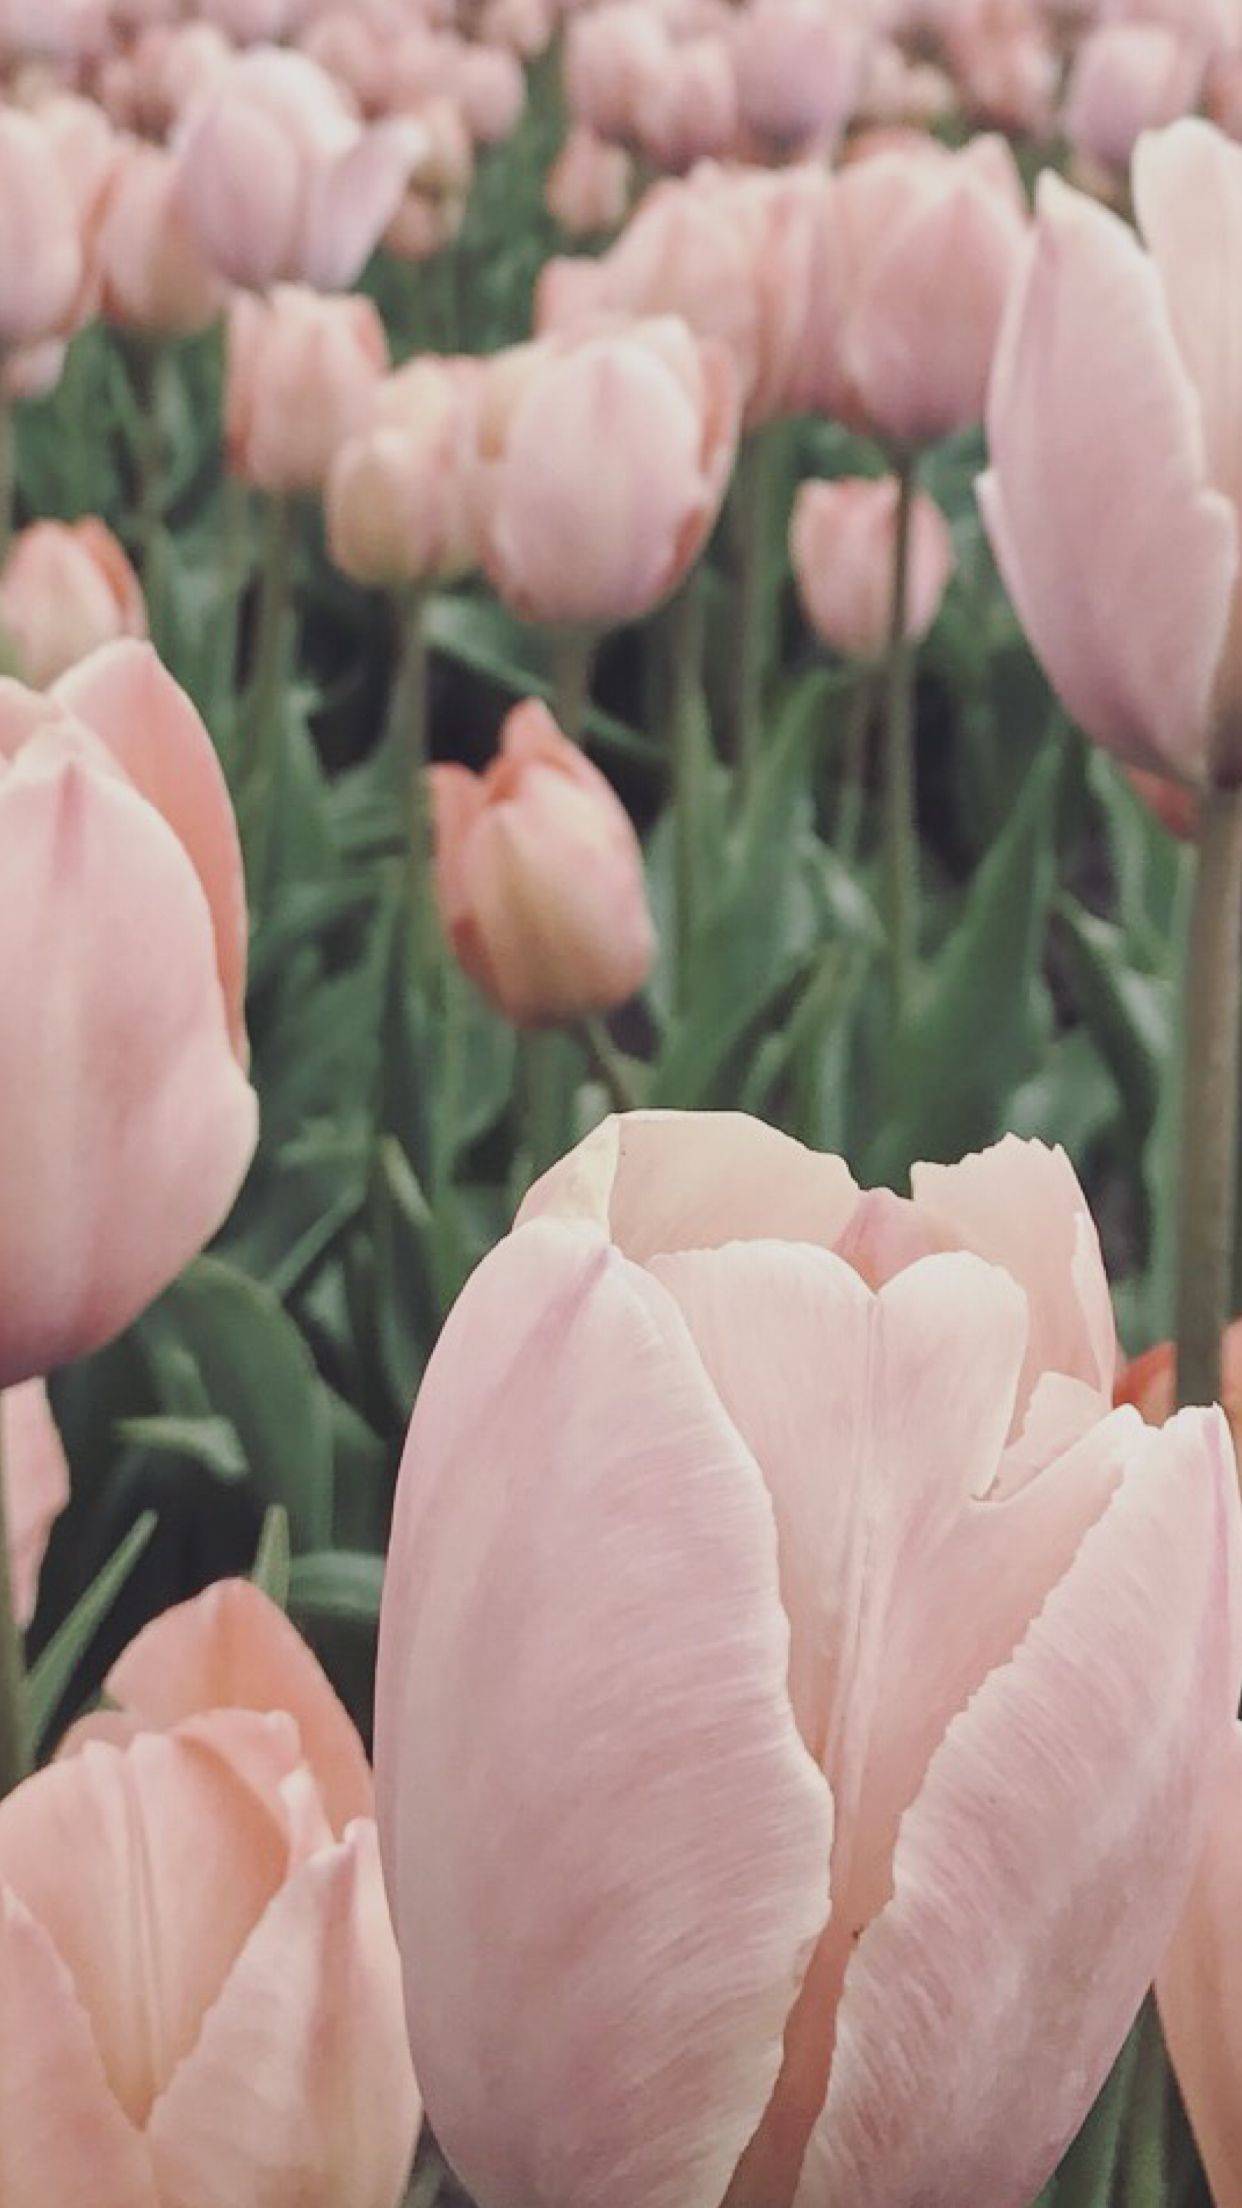 Tulips iPhone wallpaper. Flower iphone wallpaper, Pink wallpaper iphone, Beautiful flowers